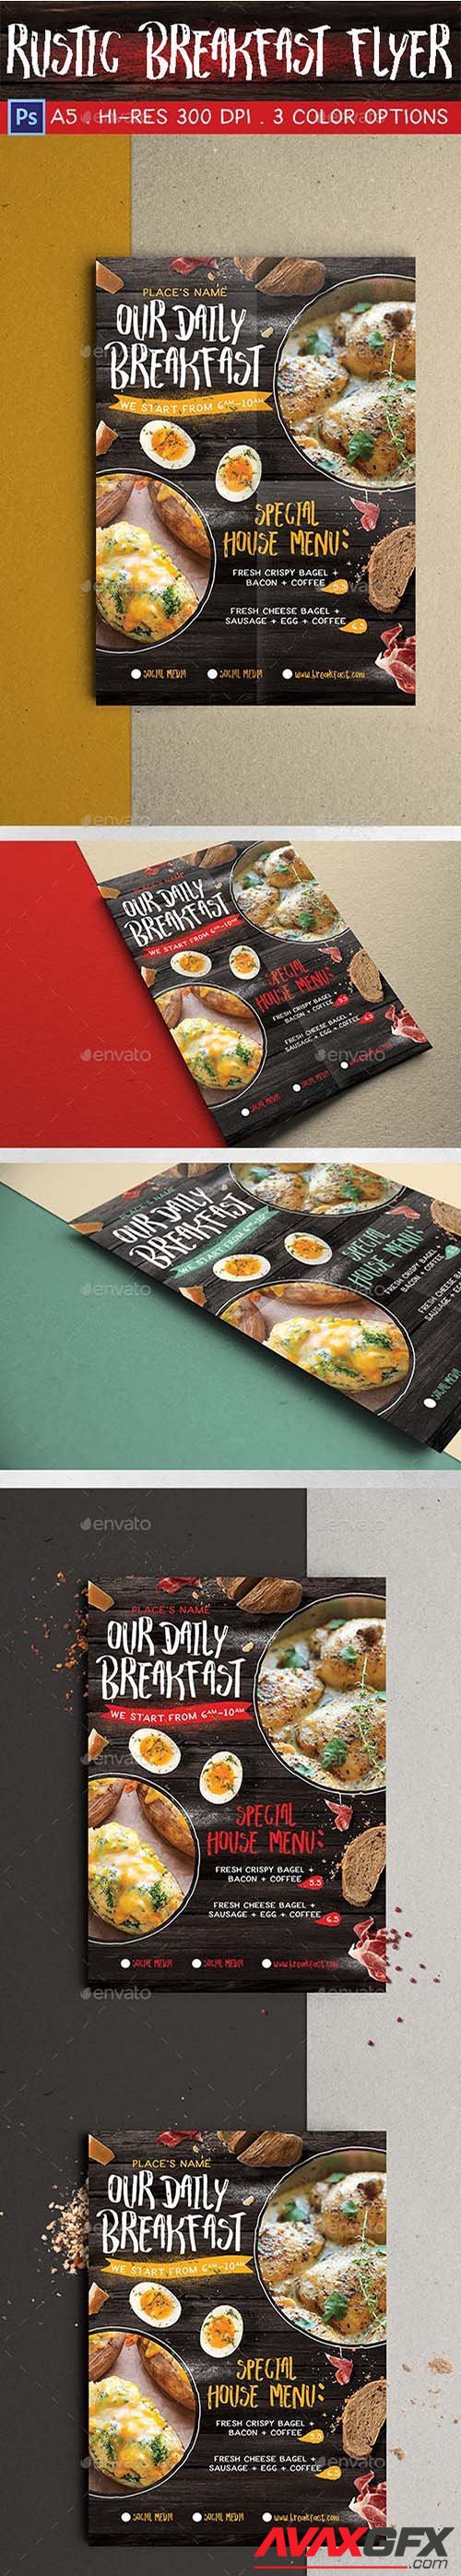 GraphicRiver - Rustic Breakfast Flyer 21781581